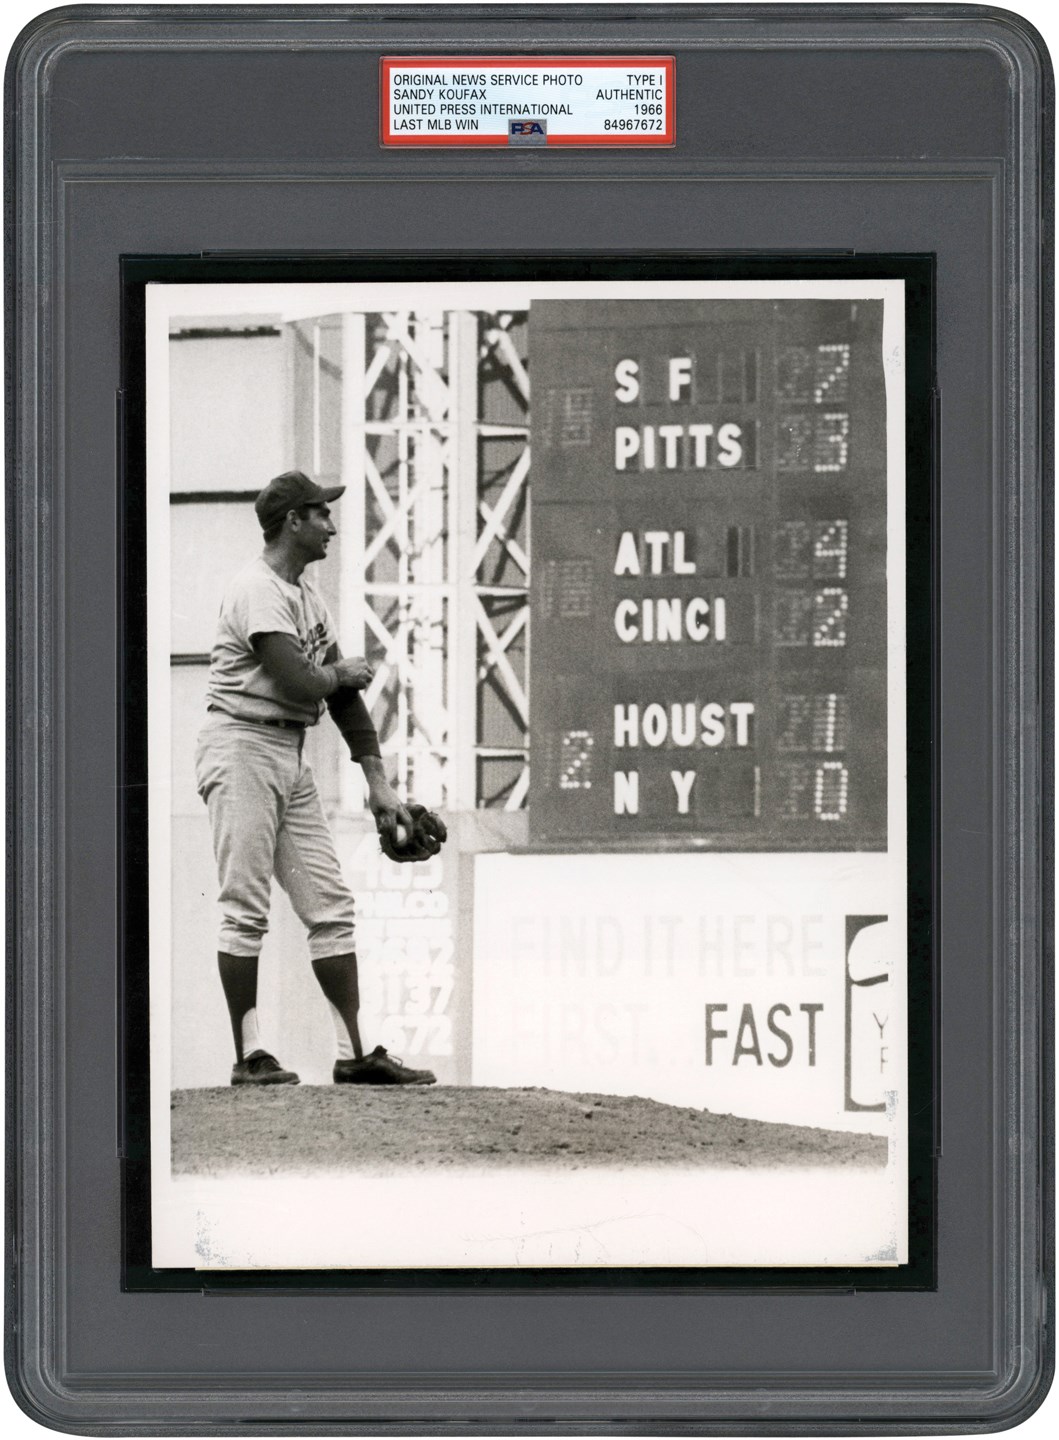 - 1966 Sandy Koufax Last Career Win Photograph (PSA Type I)